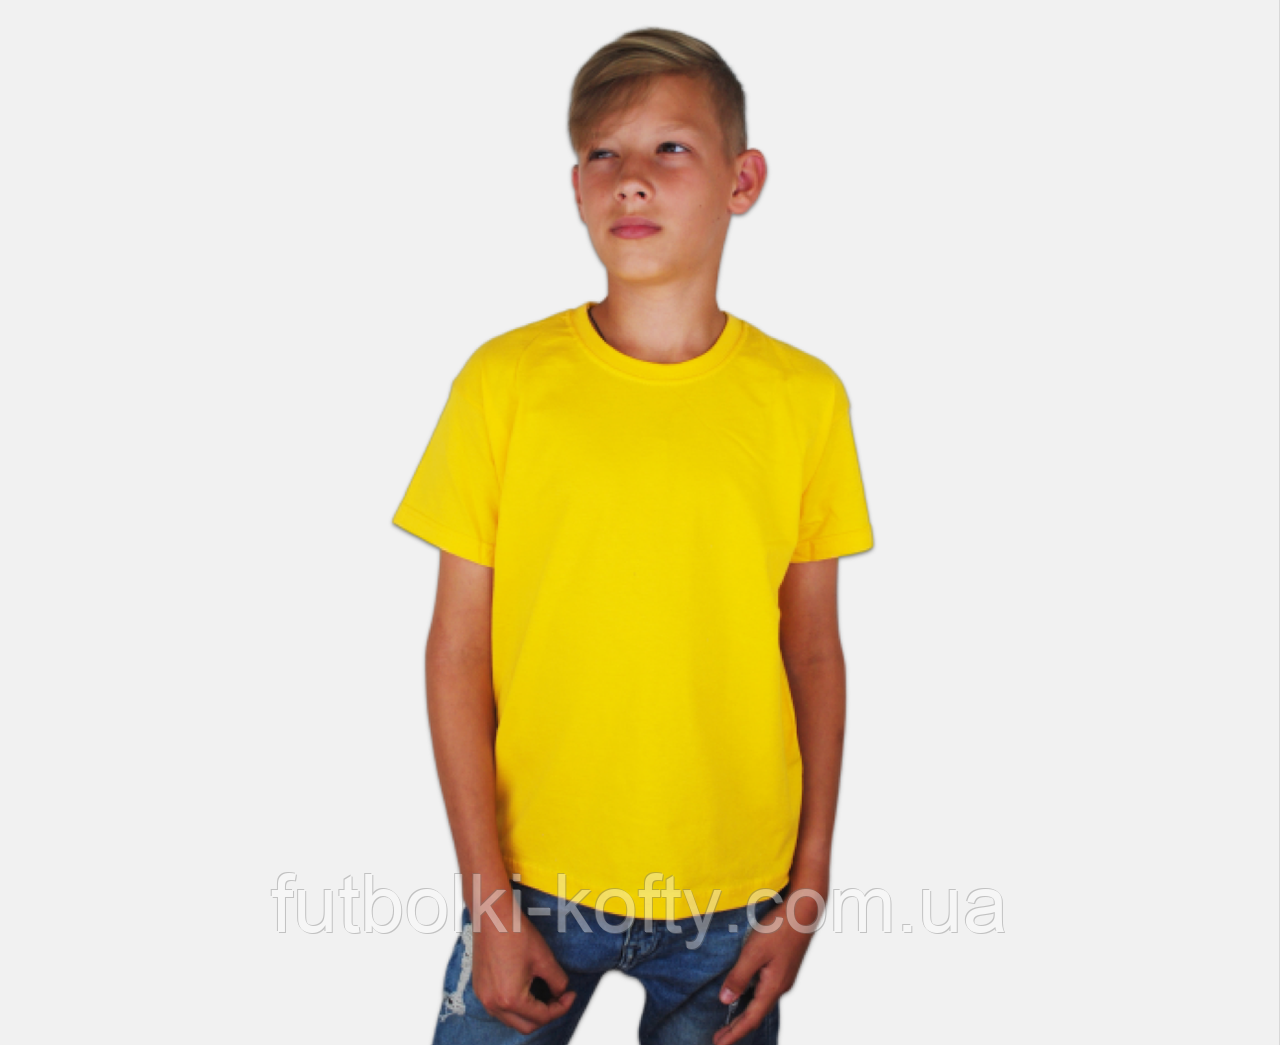 Дитяча Класична футболка для Хлопчиків Сонячно-жовта Fruit of the loom 61-033-34 3-4